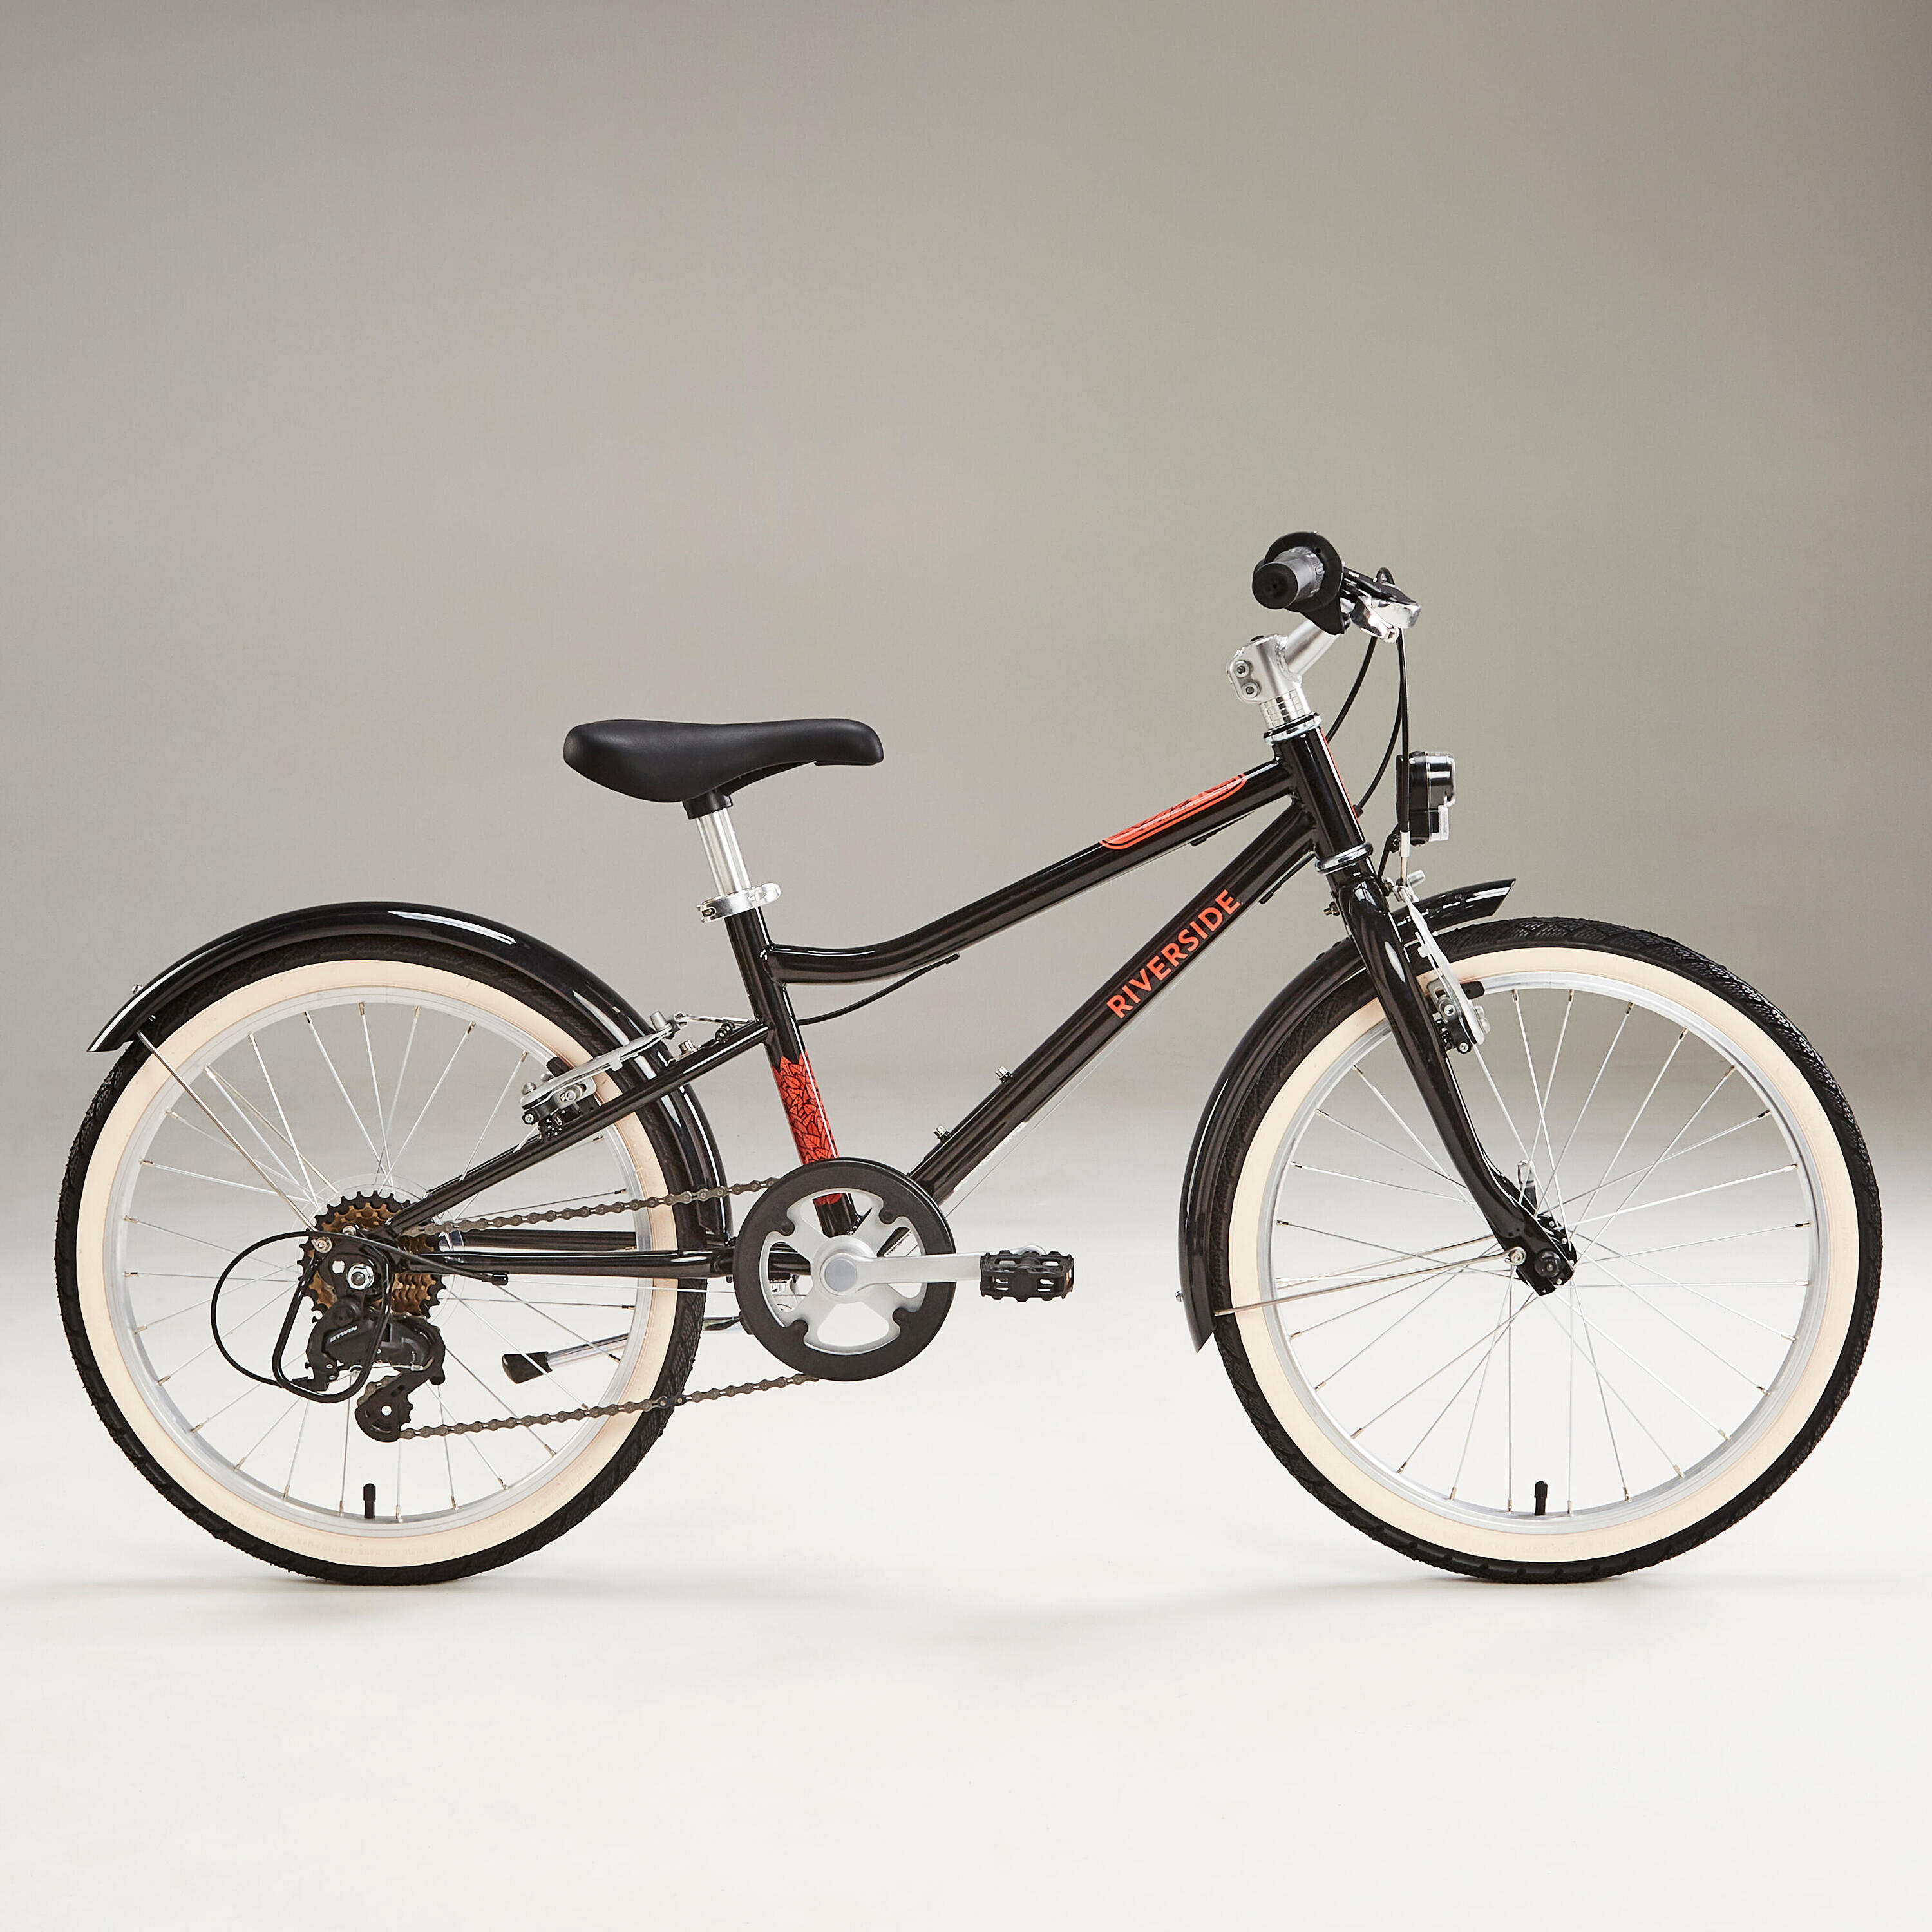 20 inch kids hybrid bike riverside 500 6-9 years - Black/peach 2/15